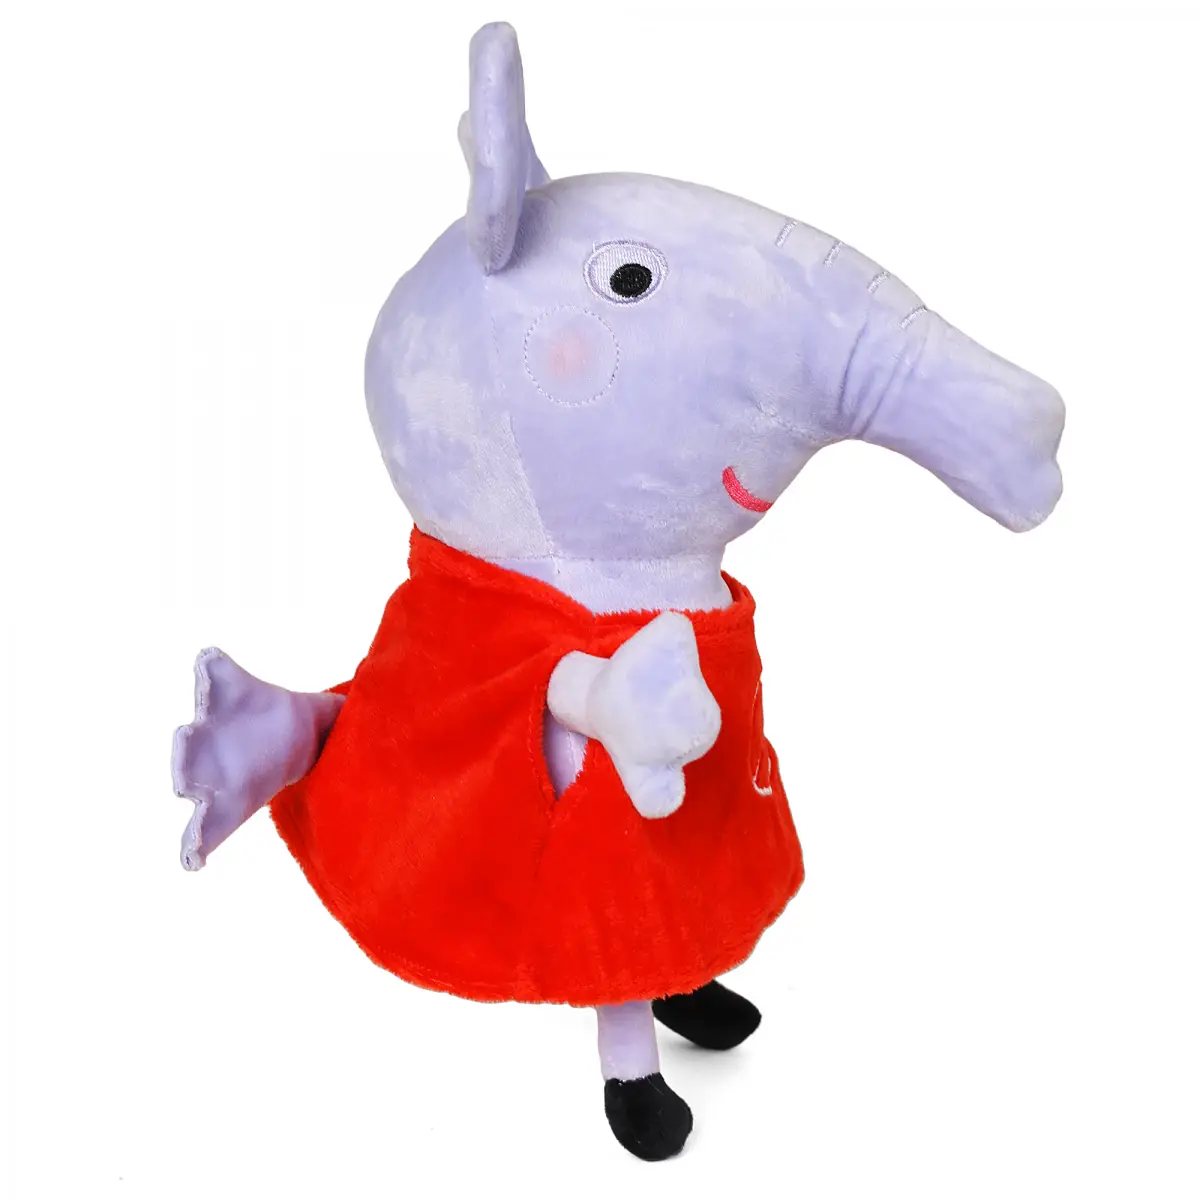 Peppa Pig Emily Elephant Soft Toy for Kids, 30cm, 18M+, Multicolour